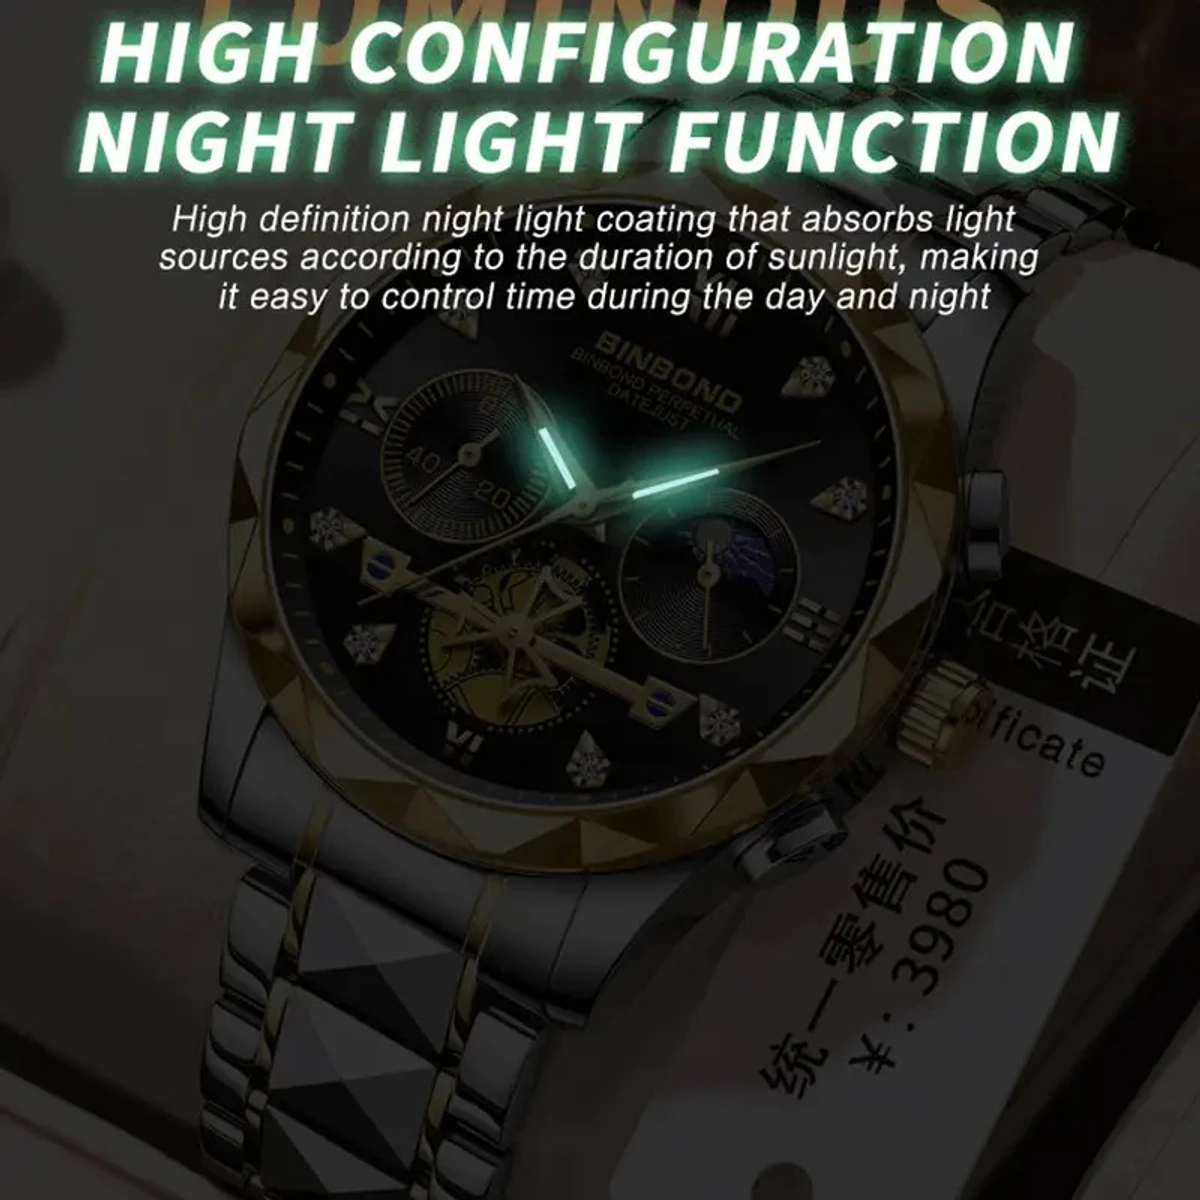 New Luxury Watch For Men Stainless Steel Waterproof Business Sport Wristwatches- Golden & Black